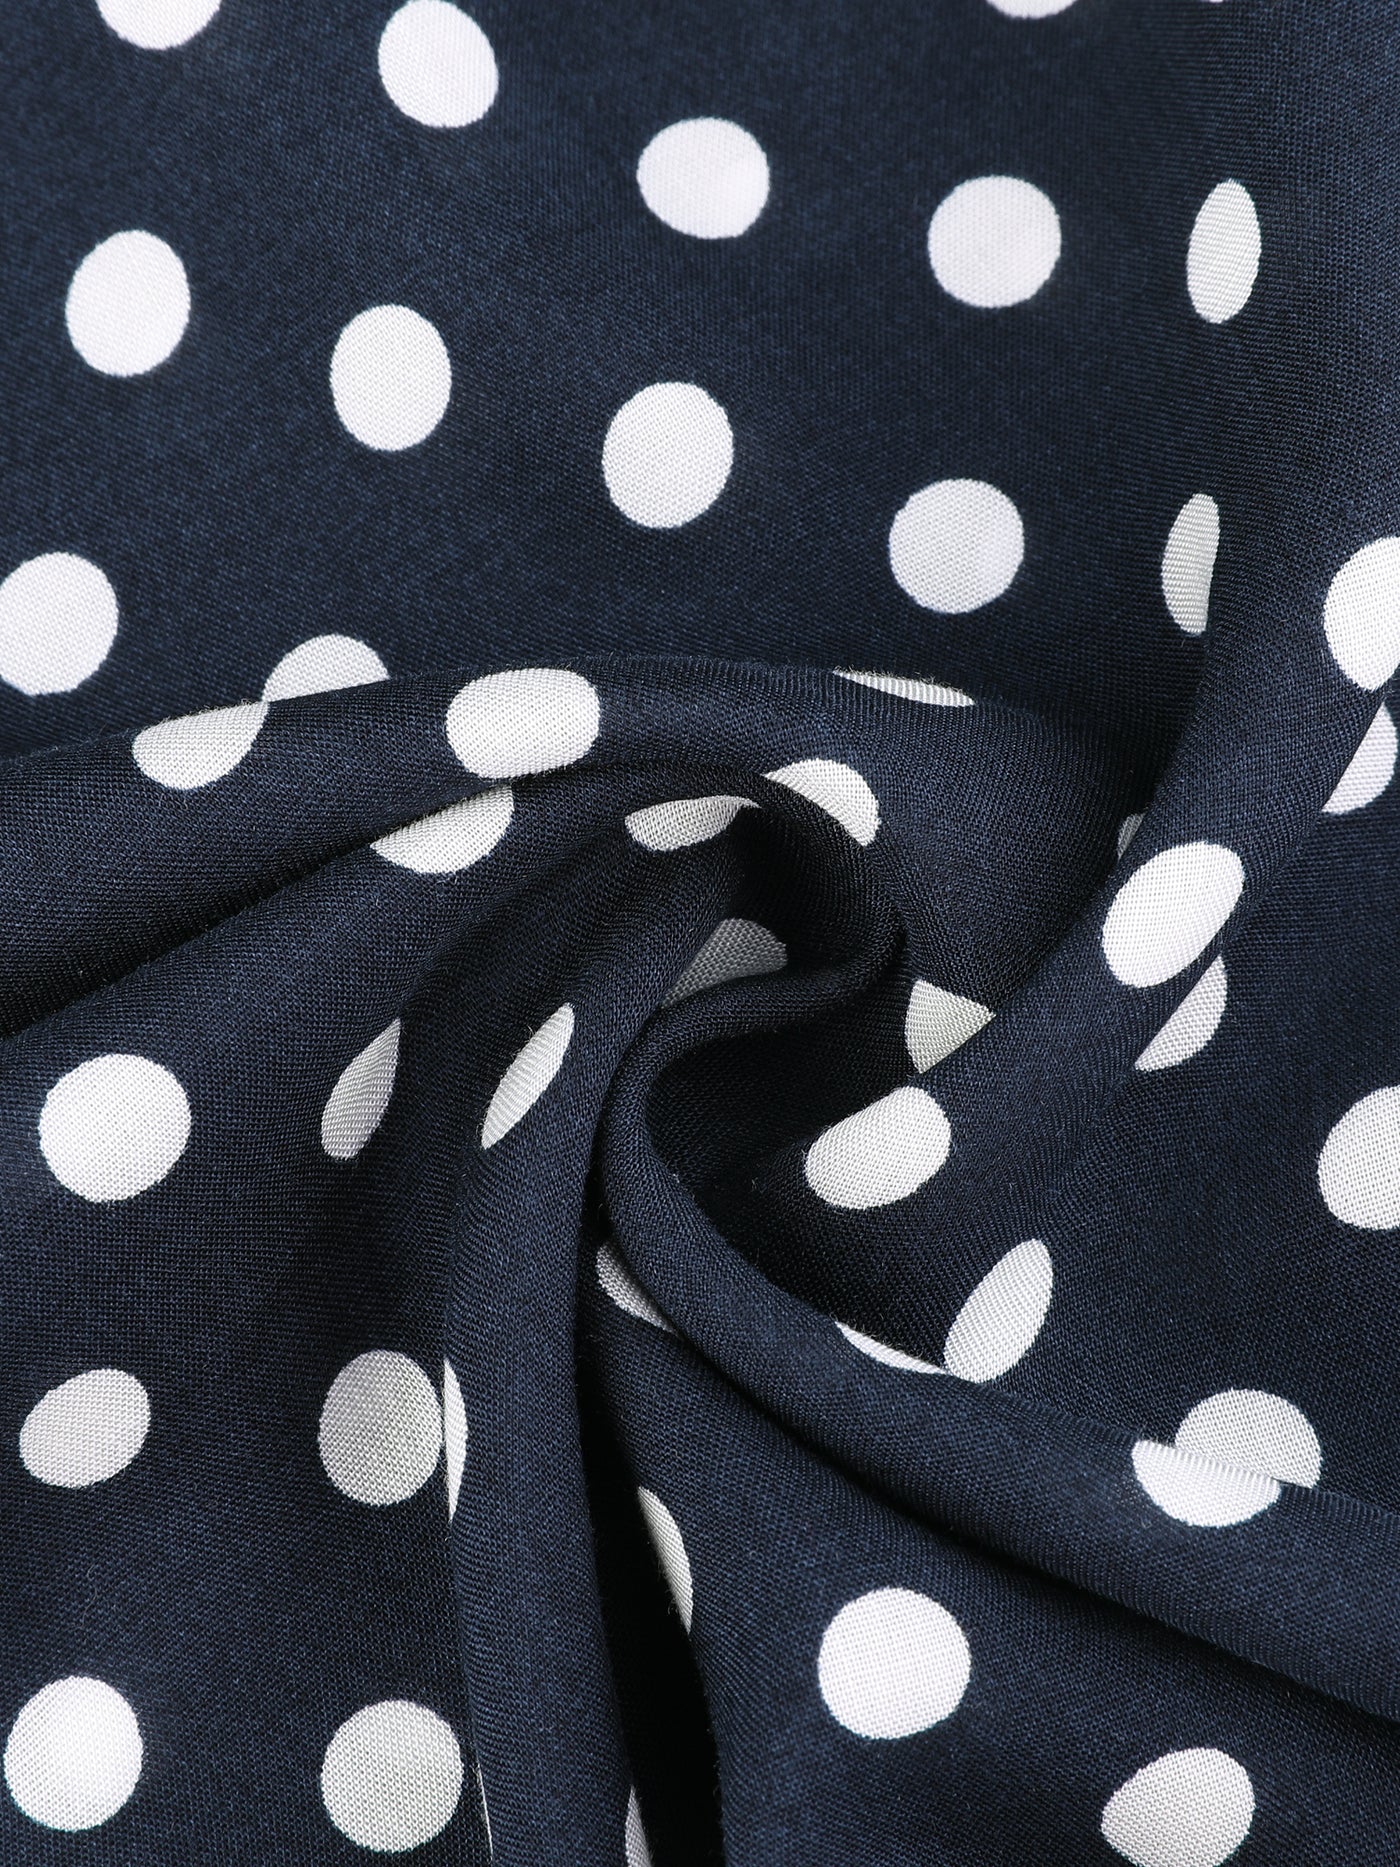 Allegra K Nightgown Sleepwear Polka Dots Tassel 3/4 Sleeve Pajamas Lounge Dress